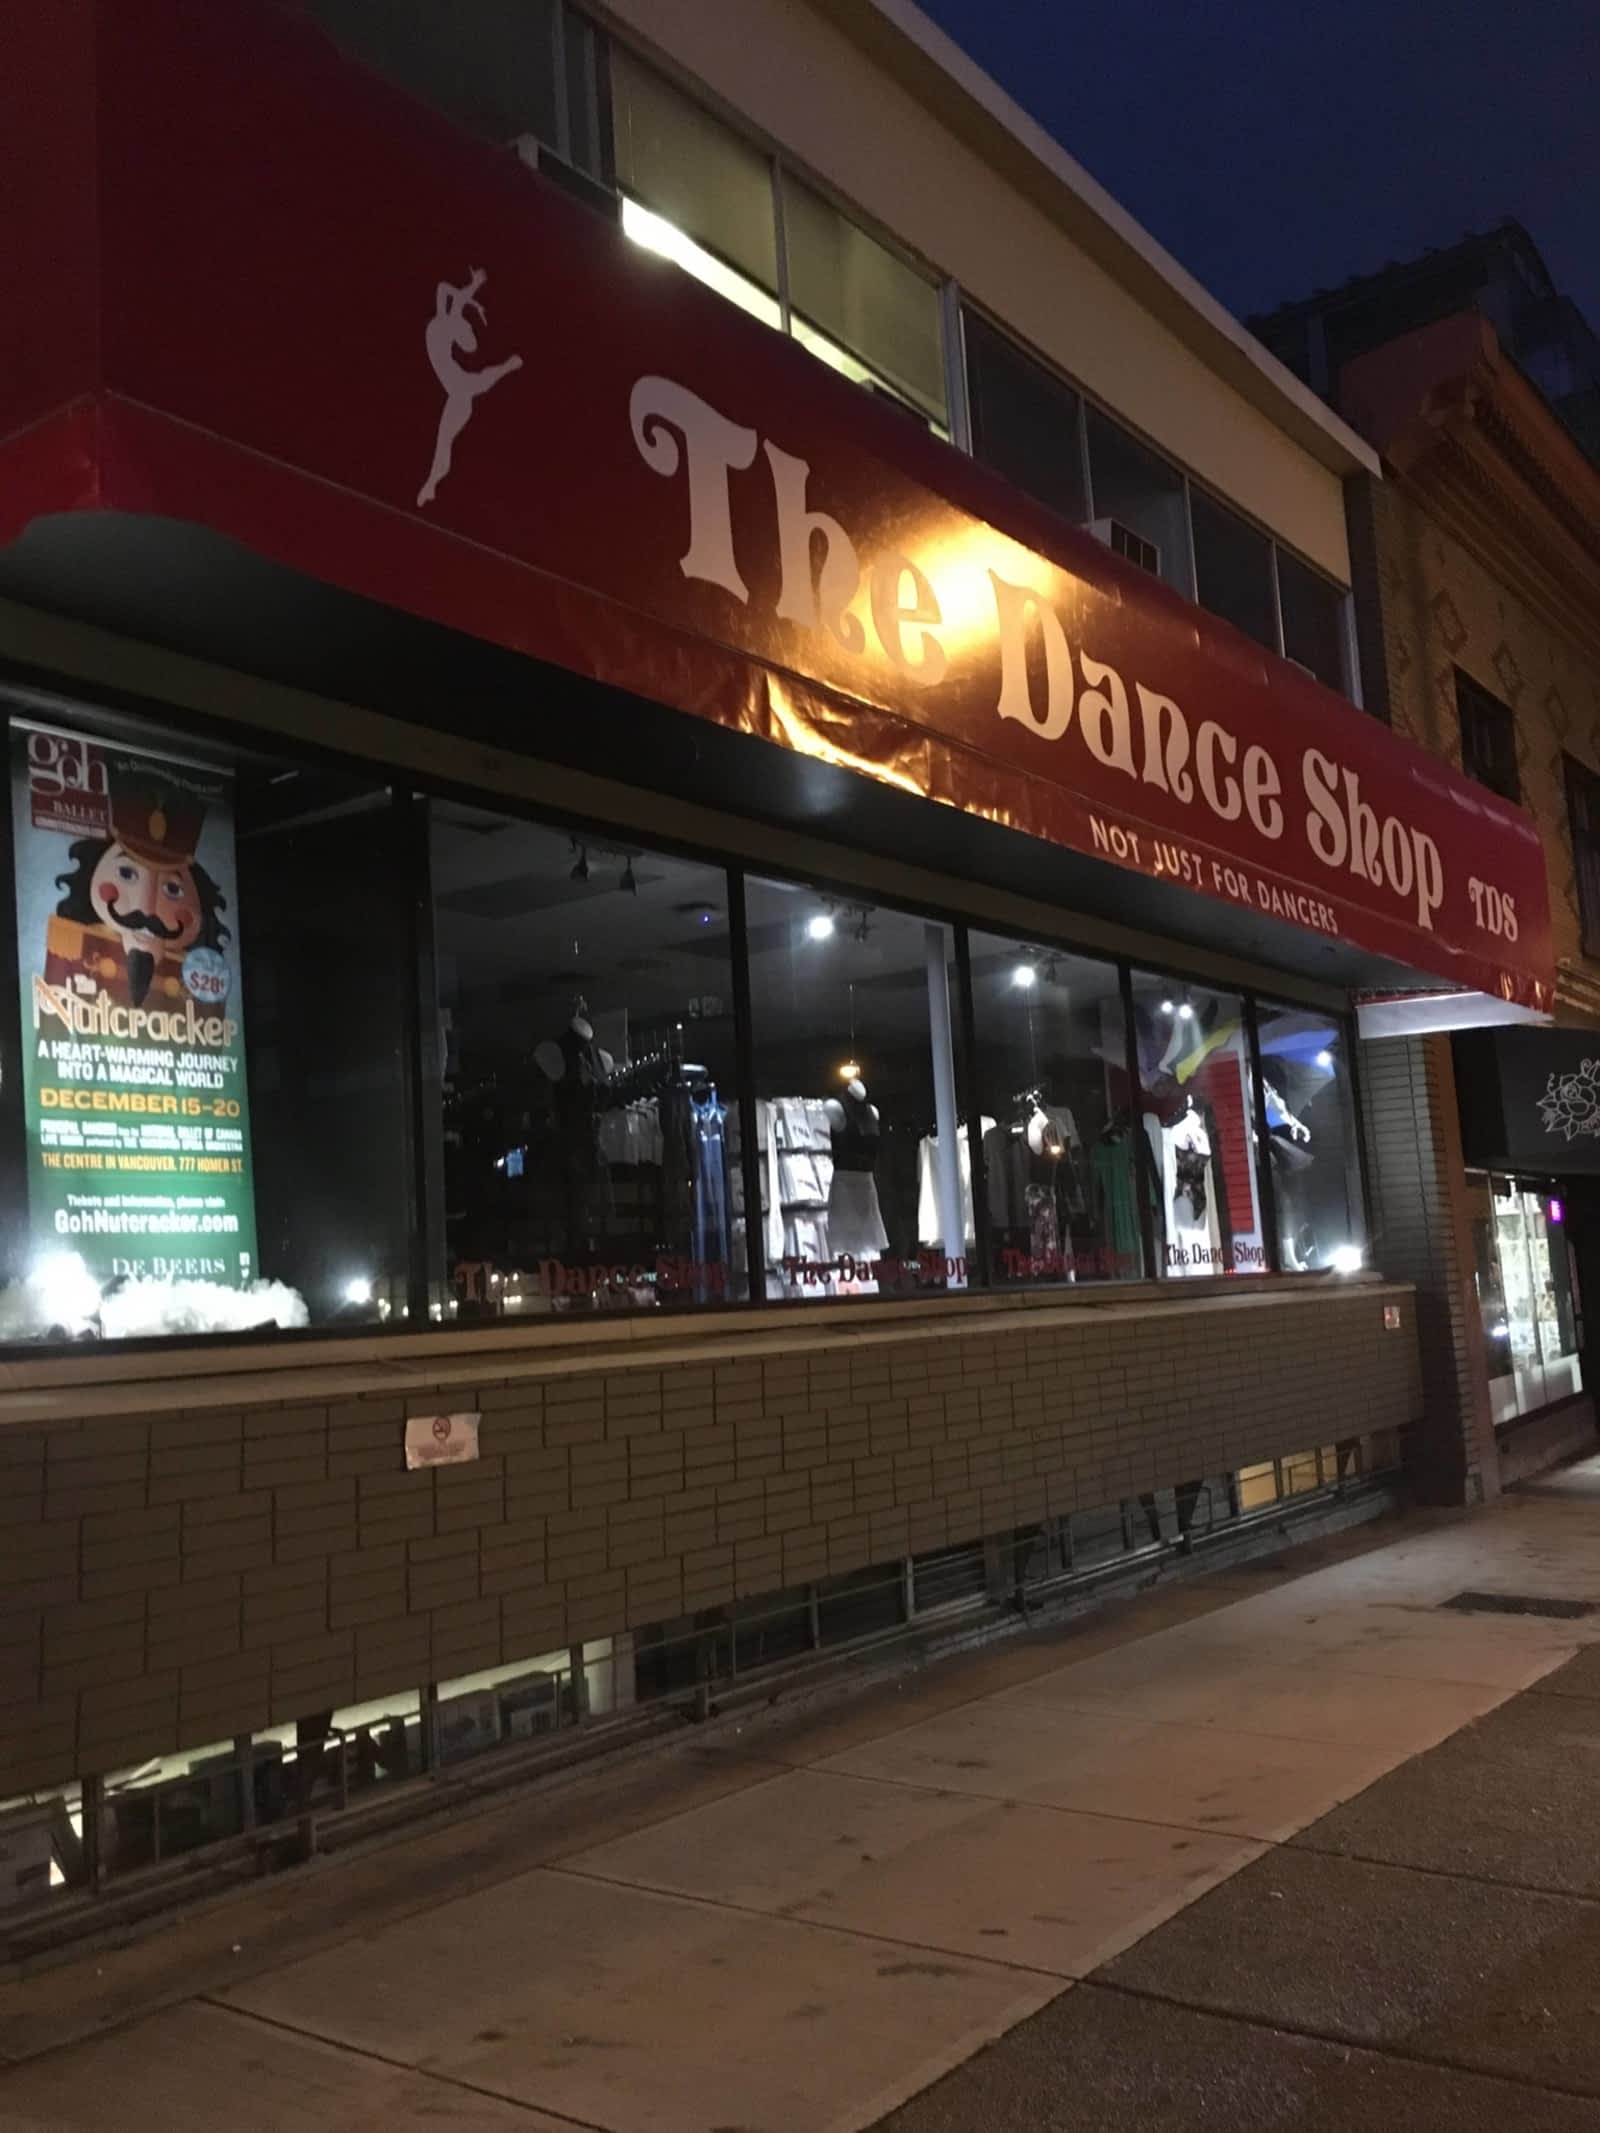 The Broadway Dance Shop Ltd - Opening 